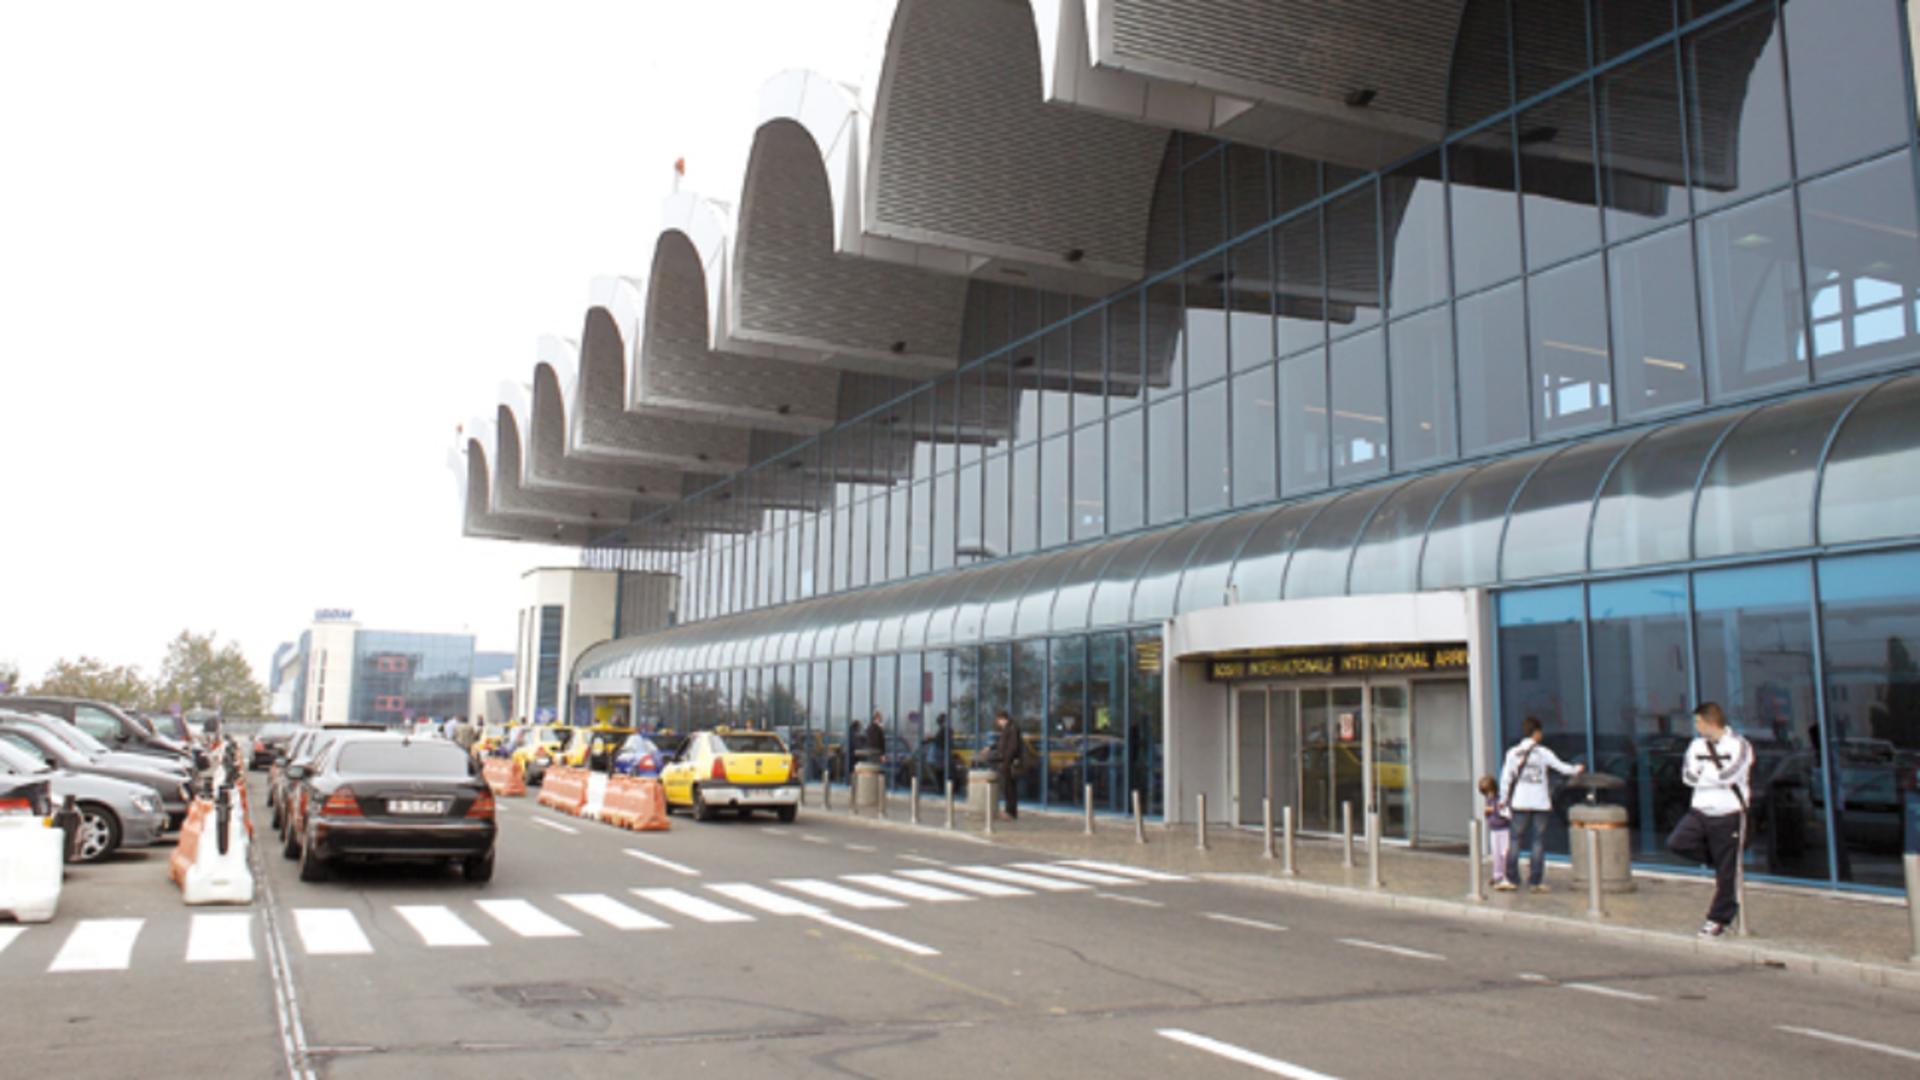 Percheziții la Aeroportul Otopeni